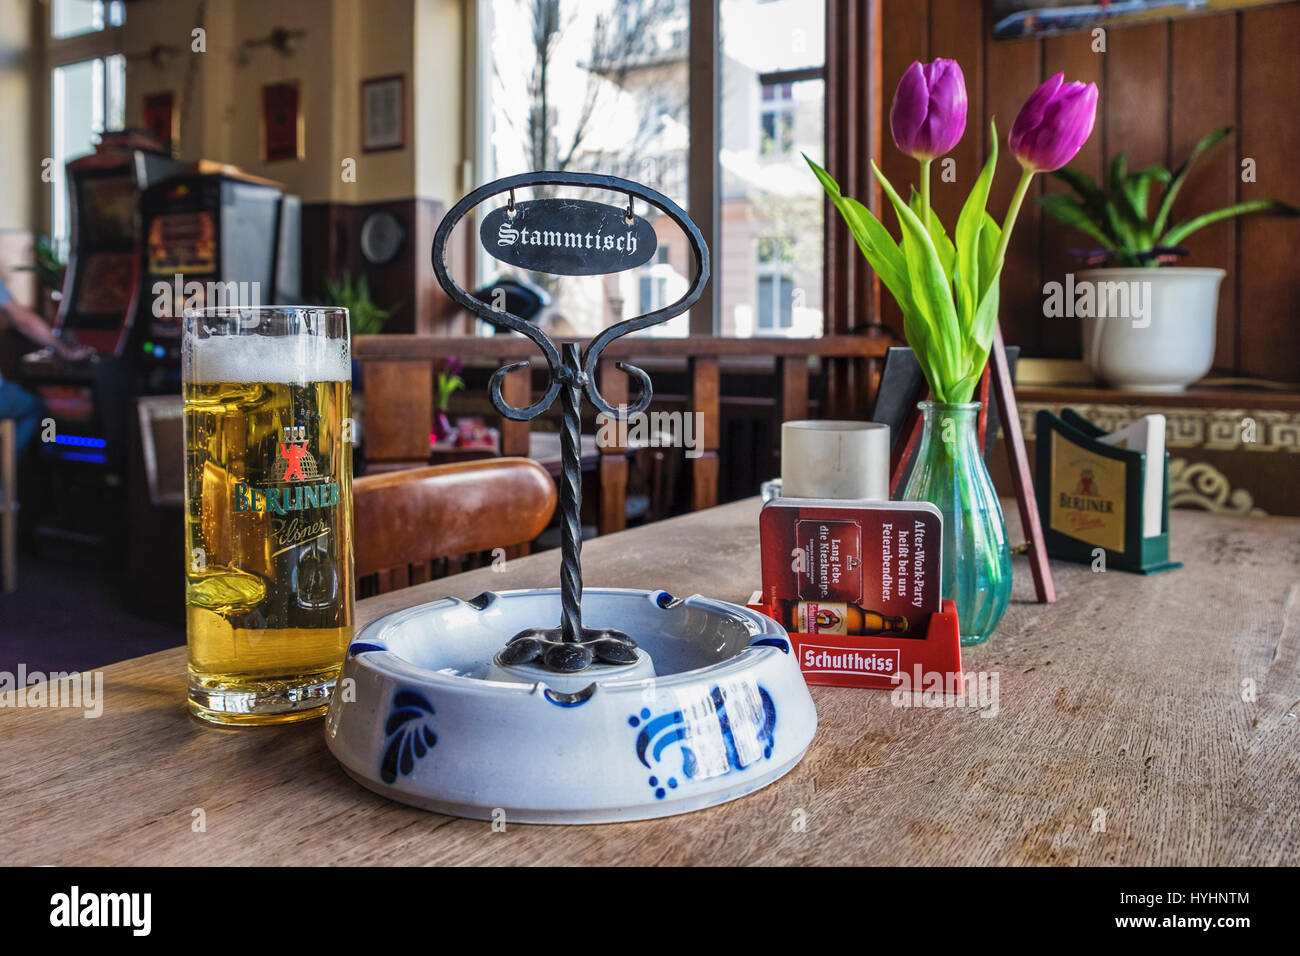 Berlin, Mitte, Zum Biermichel Traditional German Corner pub interior, typical Local bar with beer, flowers and Stammtisch sign Stock Photo